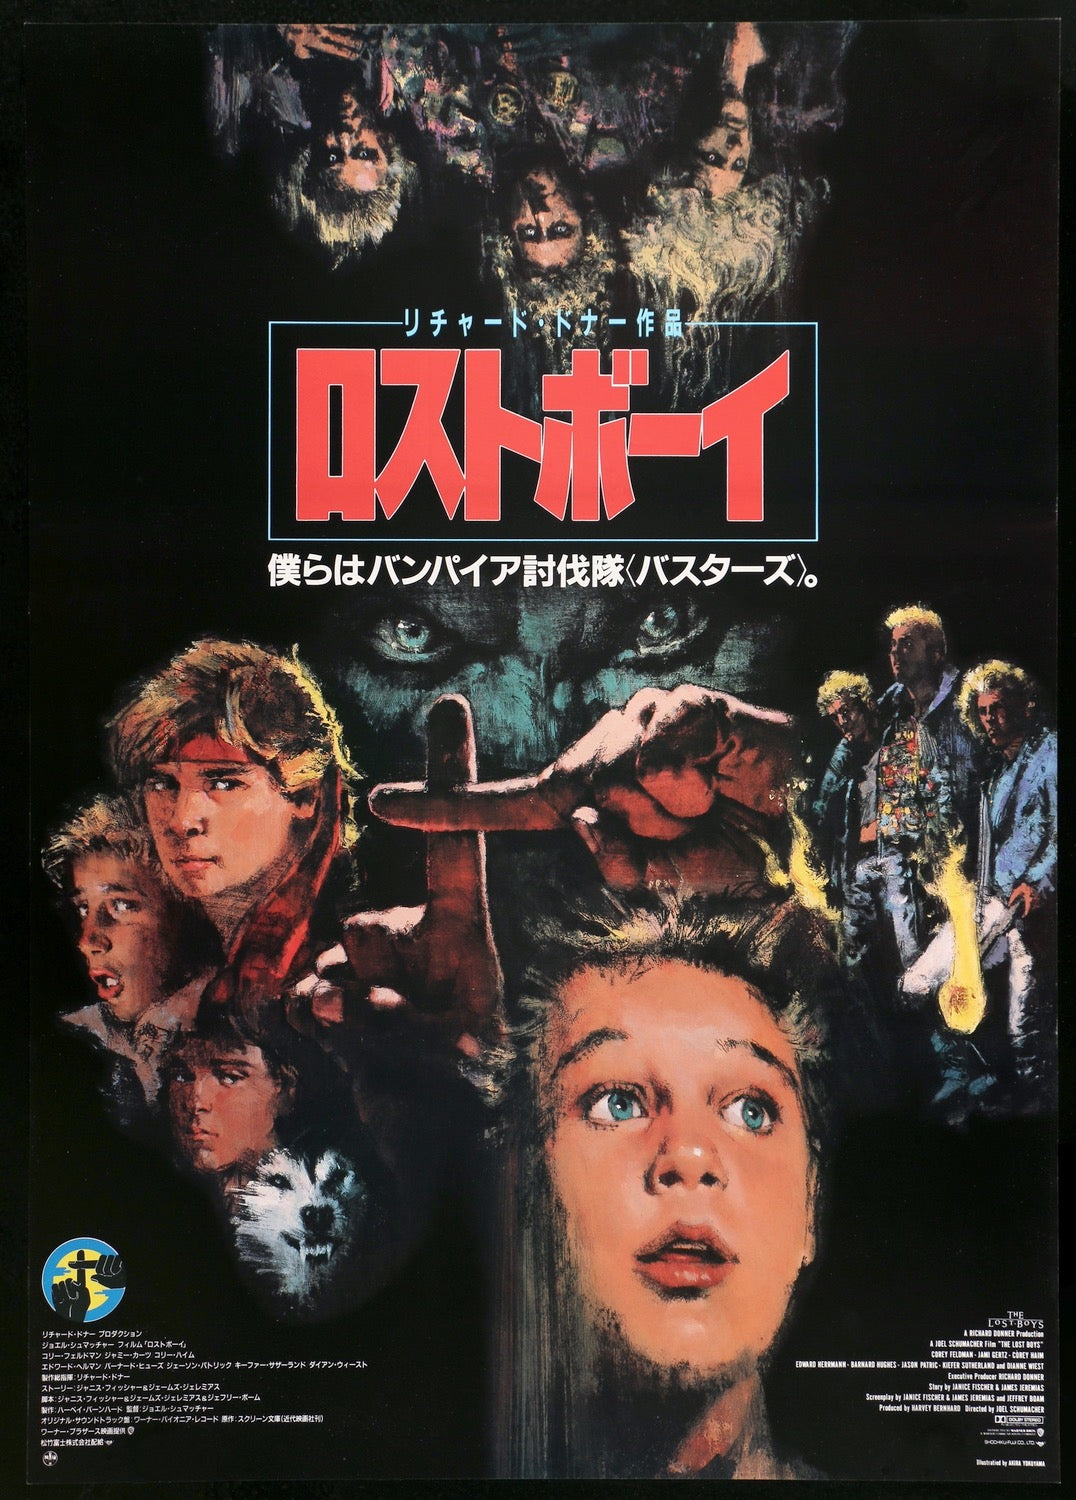 Lost Boys (1987) original movie poster for sale at Original Film Art